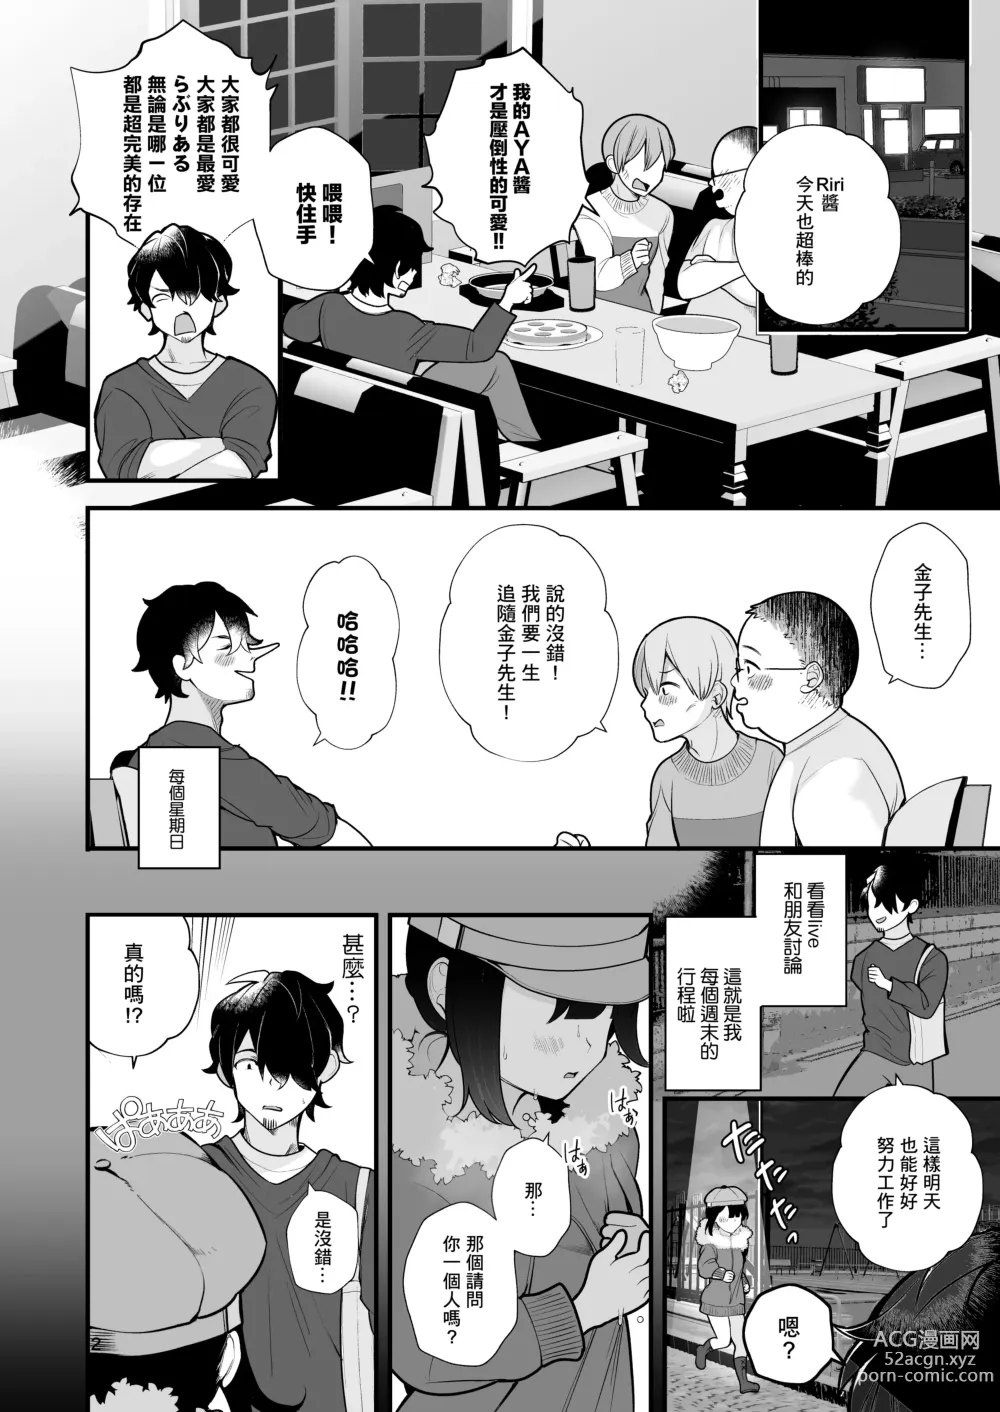 Page 5 of doujinshi 關於我推的偶像是暴露狂這件事